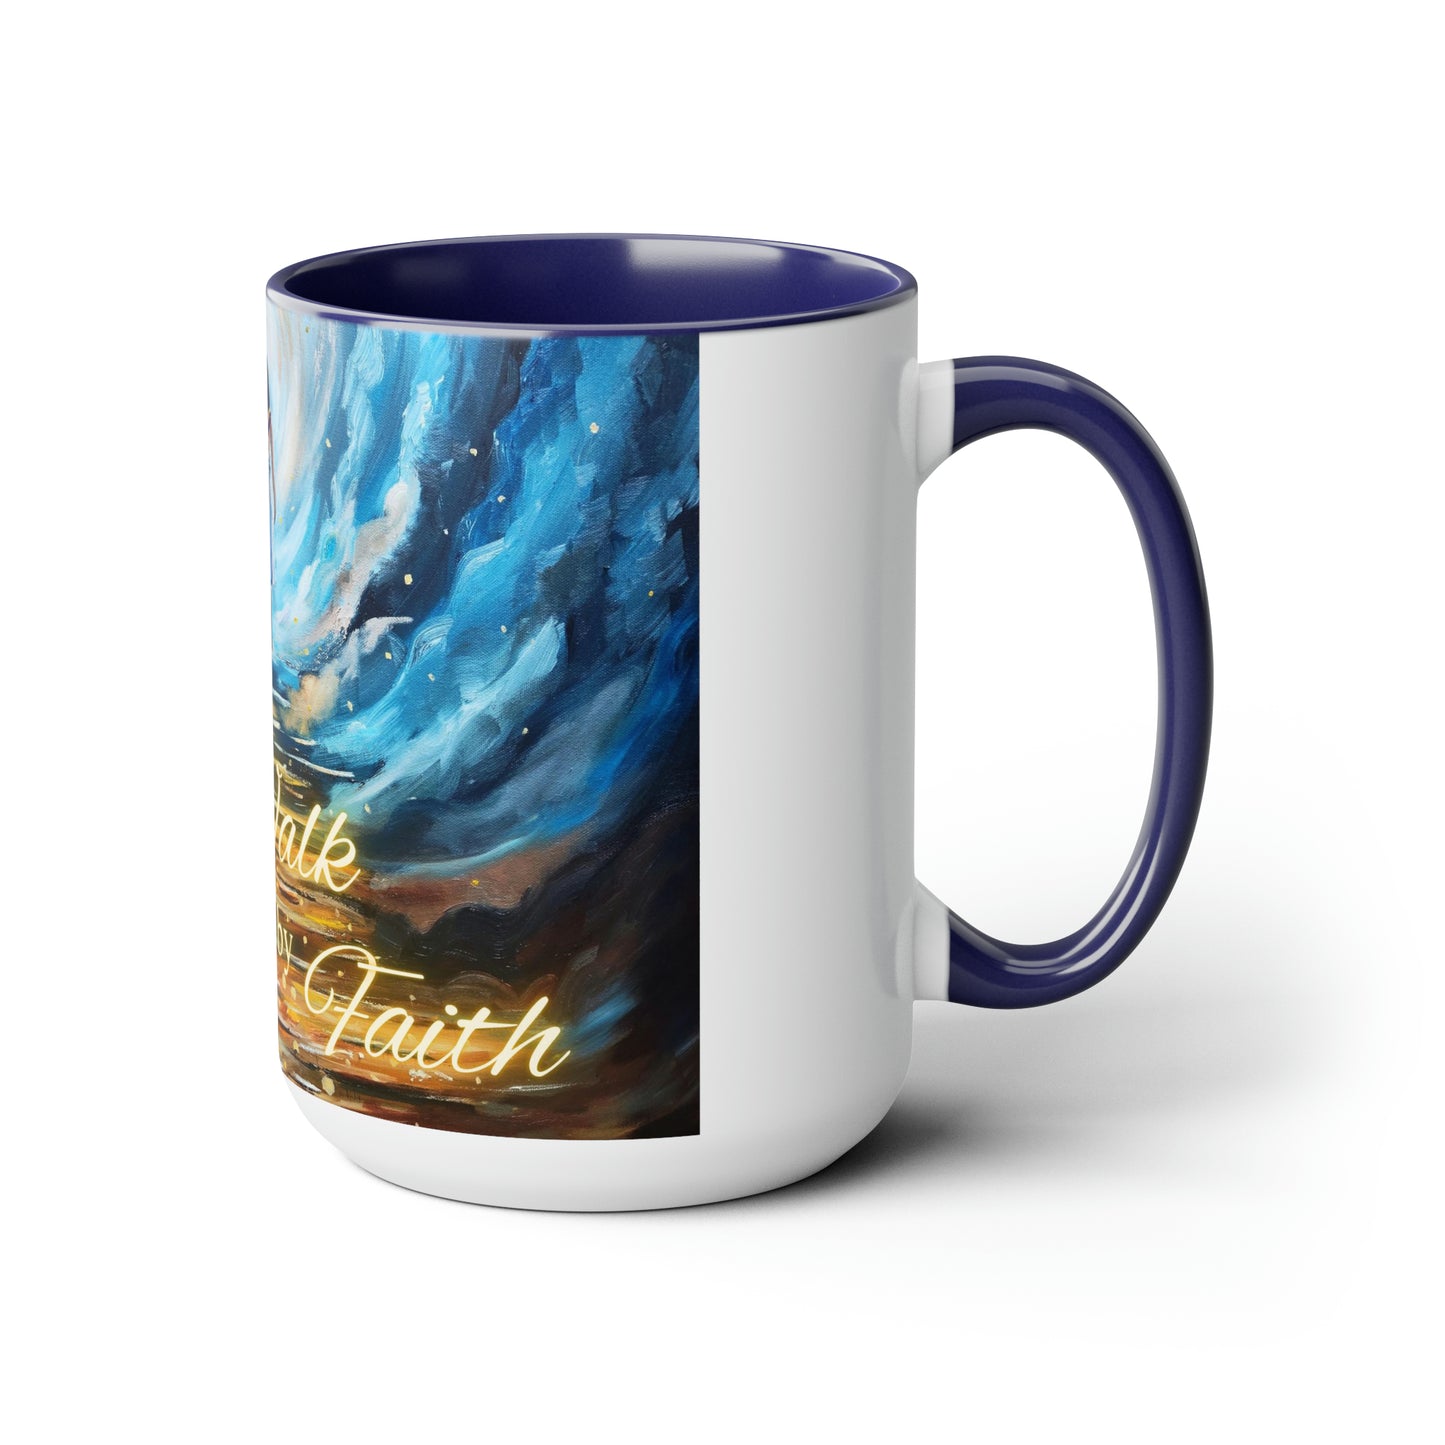 Arise and Walk by Faith Two-Tone Coffee Mugs, 15oz